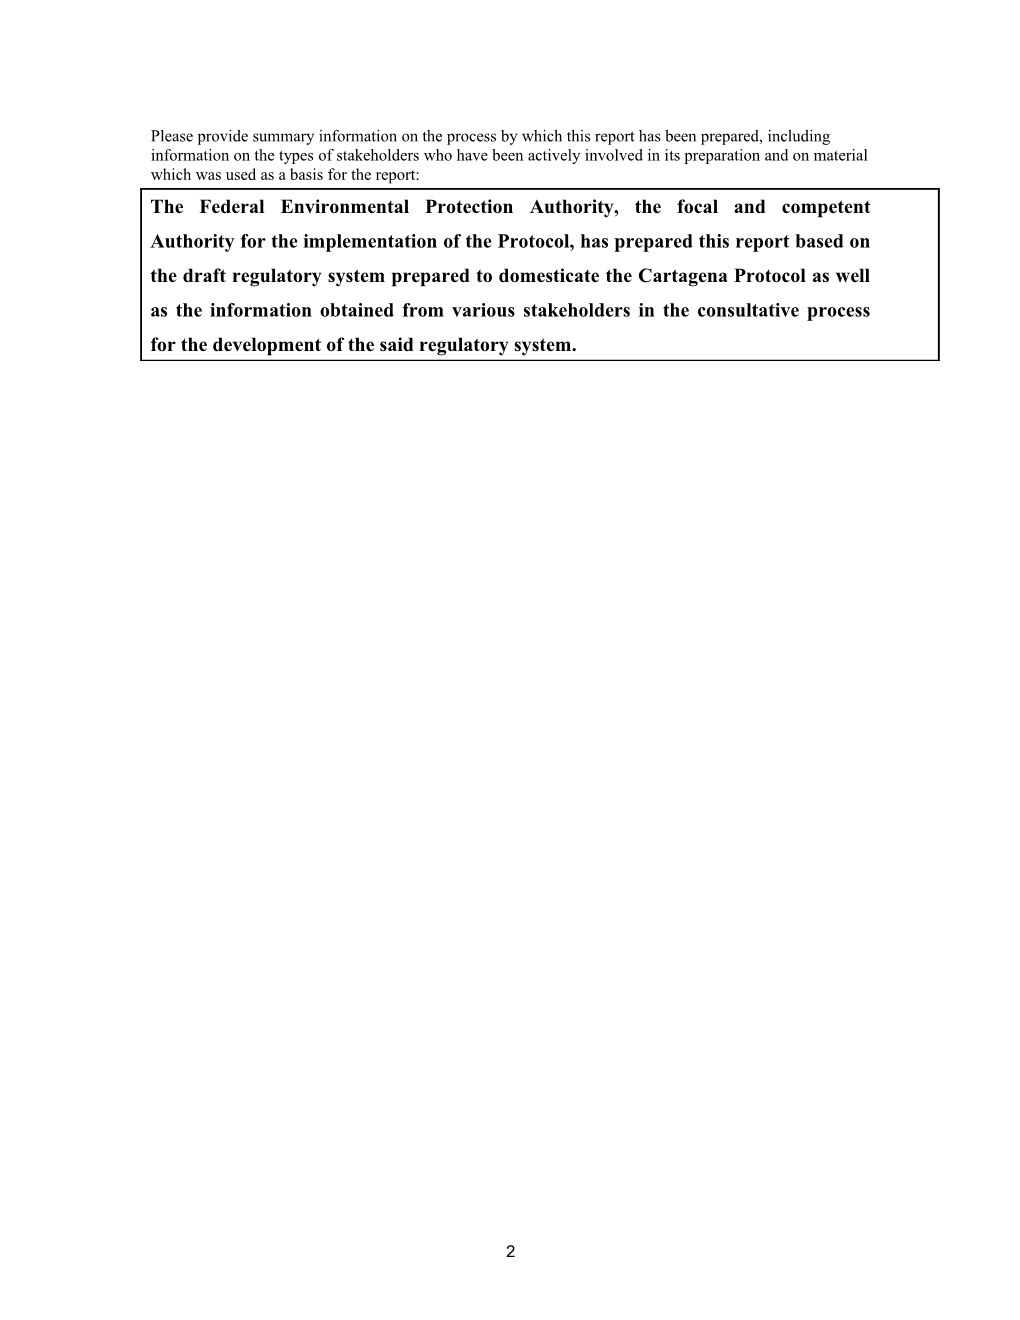 Interim Report on Implementation of the Cartagena Protocol on Biosafety - Ethiopia (English